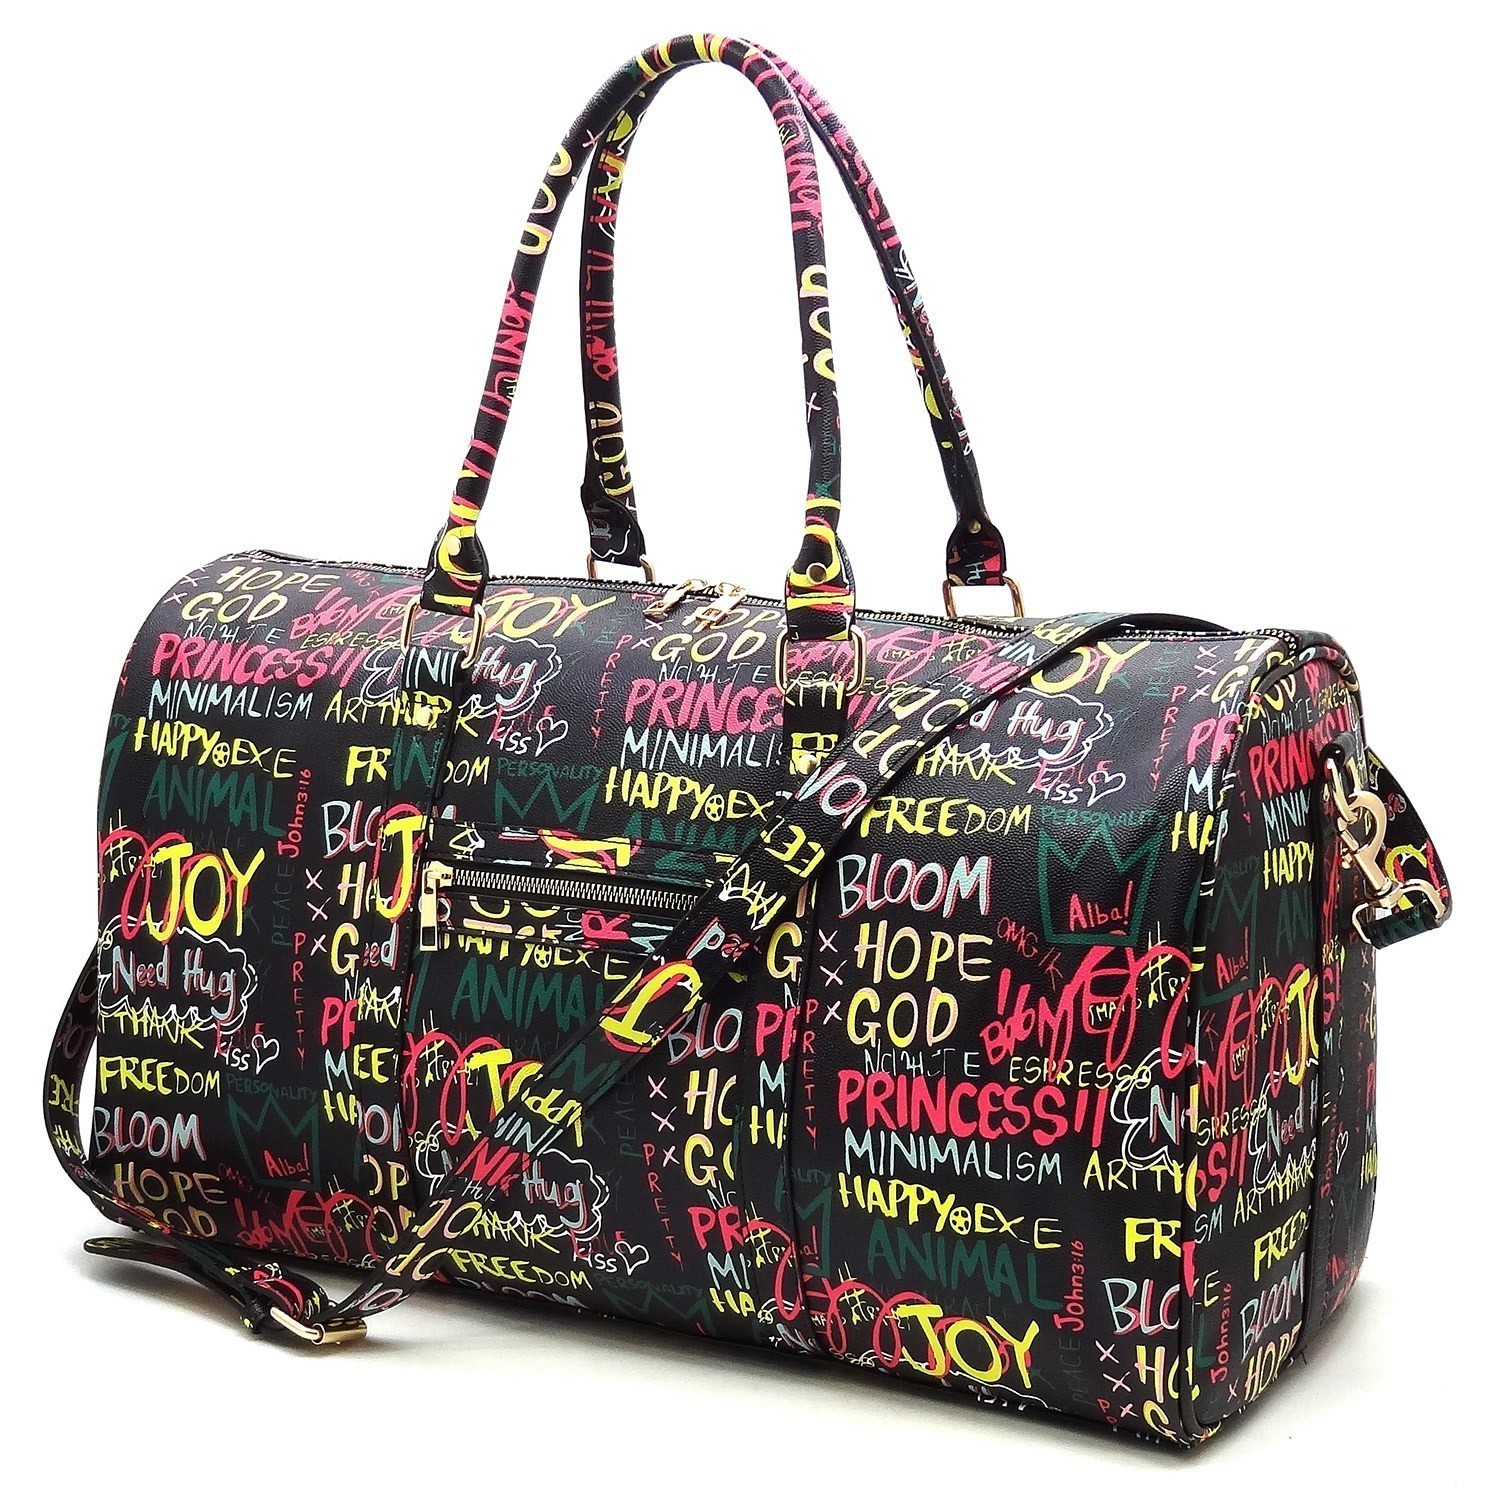  Multicolor Graffiti Printed Weekender Bag Overnight Bag Travel  Carry On Duffle Bag 20 Large Tote Gym Bag (20-Black)